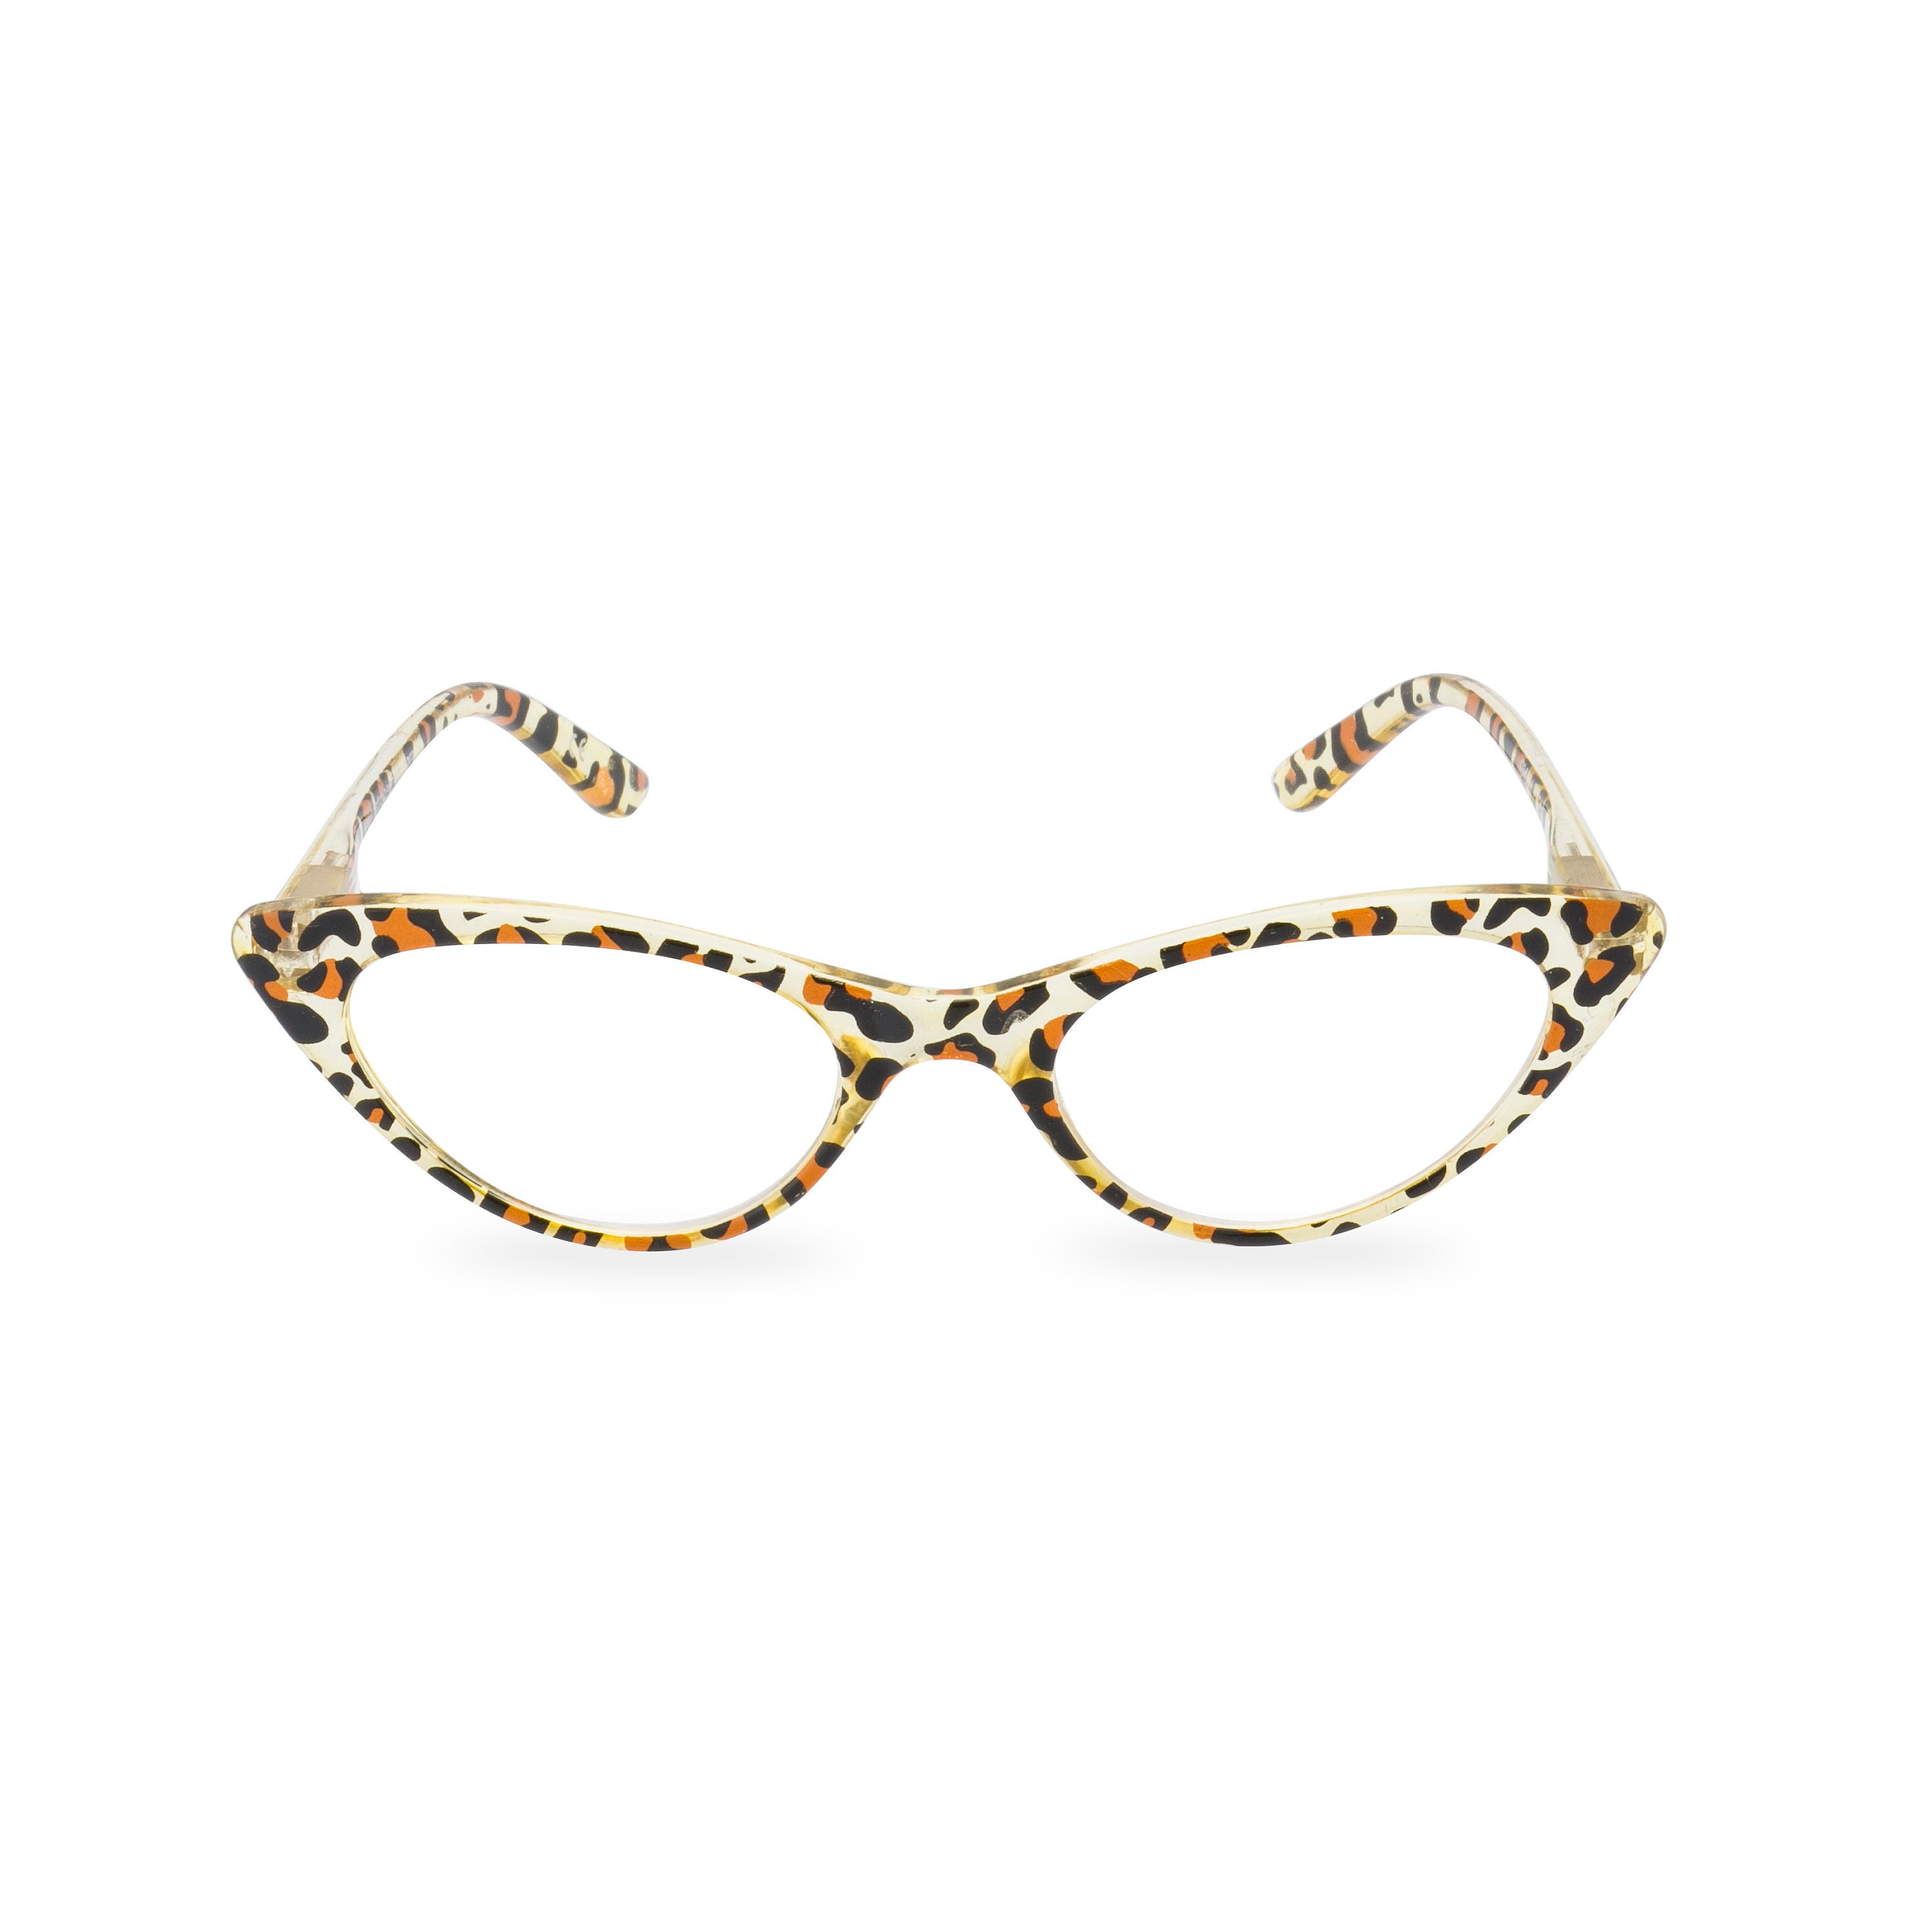 Cateye Leopard Print Glasses Frame 1950s 60s Style - Etsy